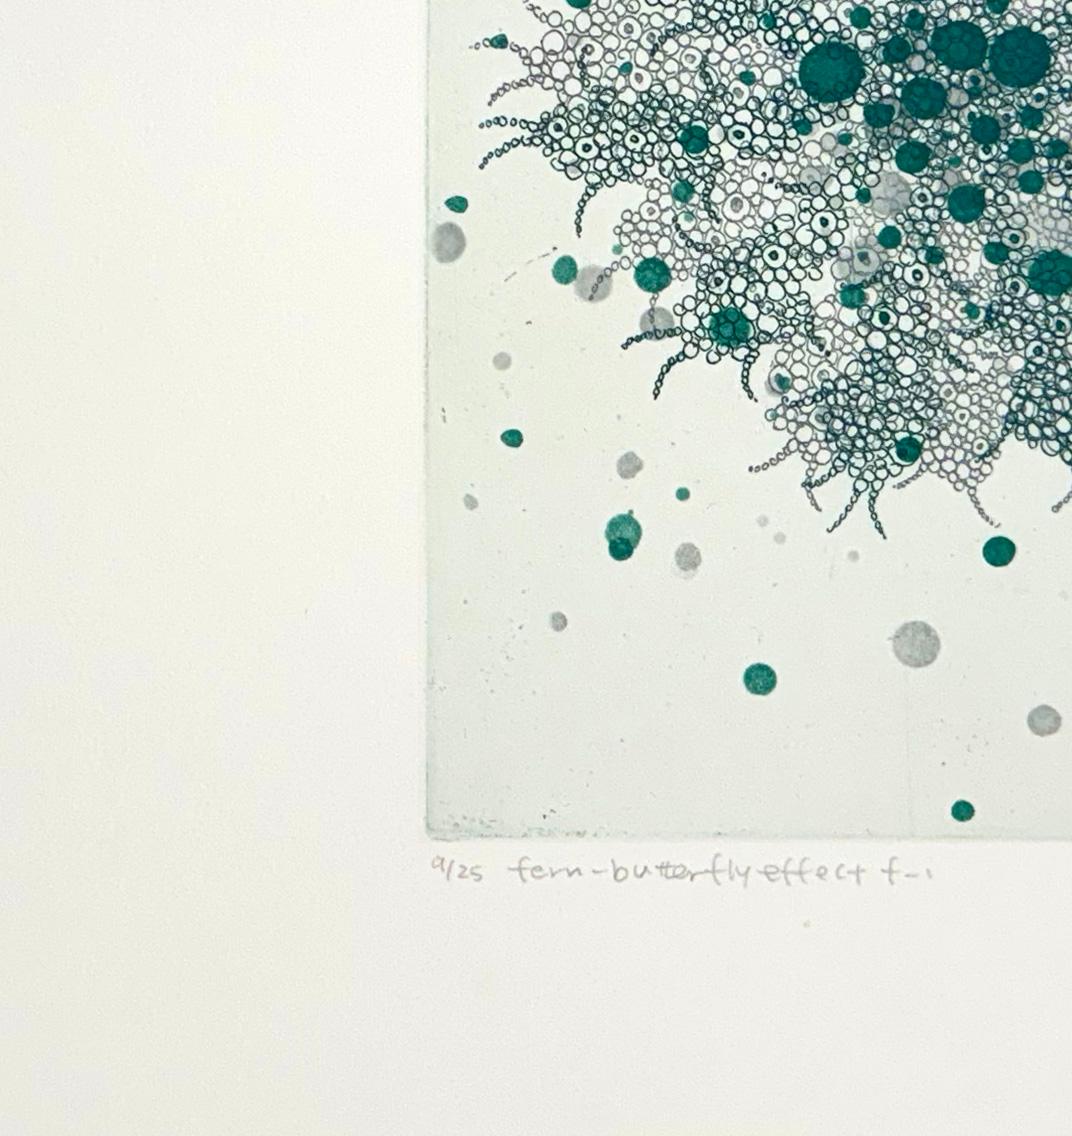 fern-butterfly effect  f-1 - Abstract Geometric Print by Seiko Tachibana